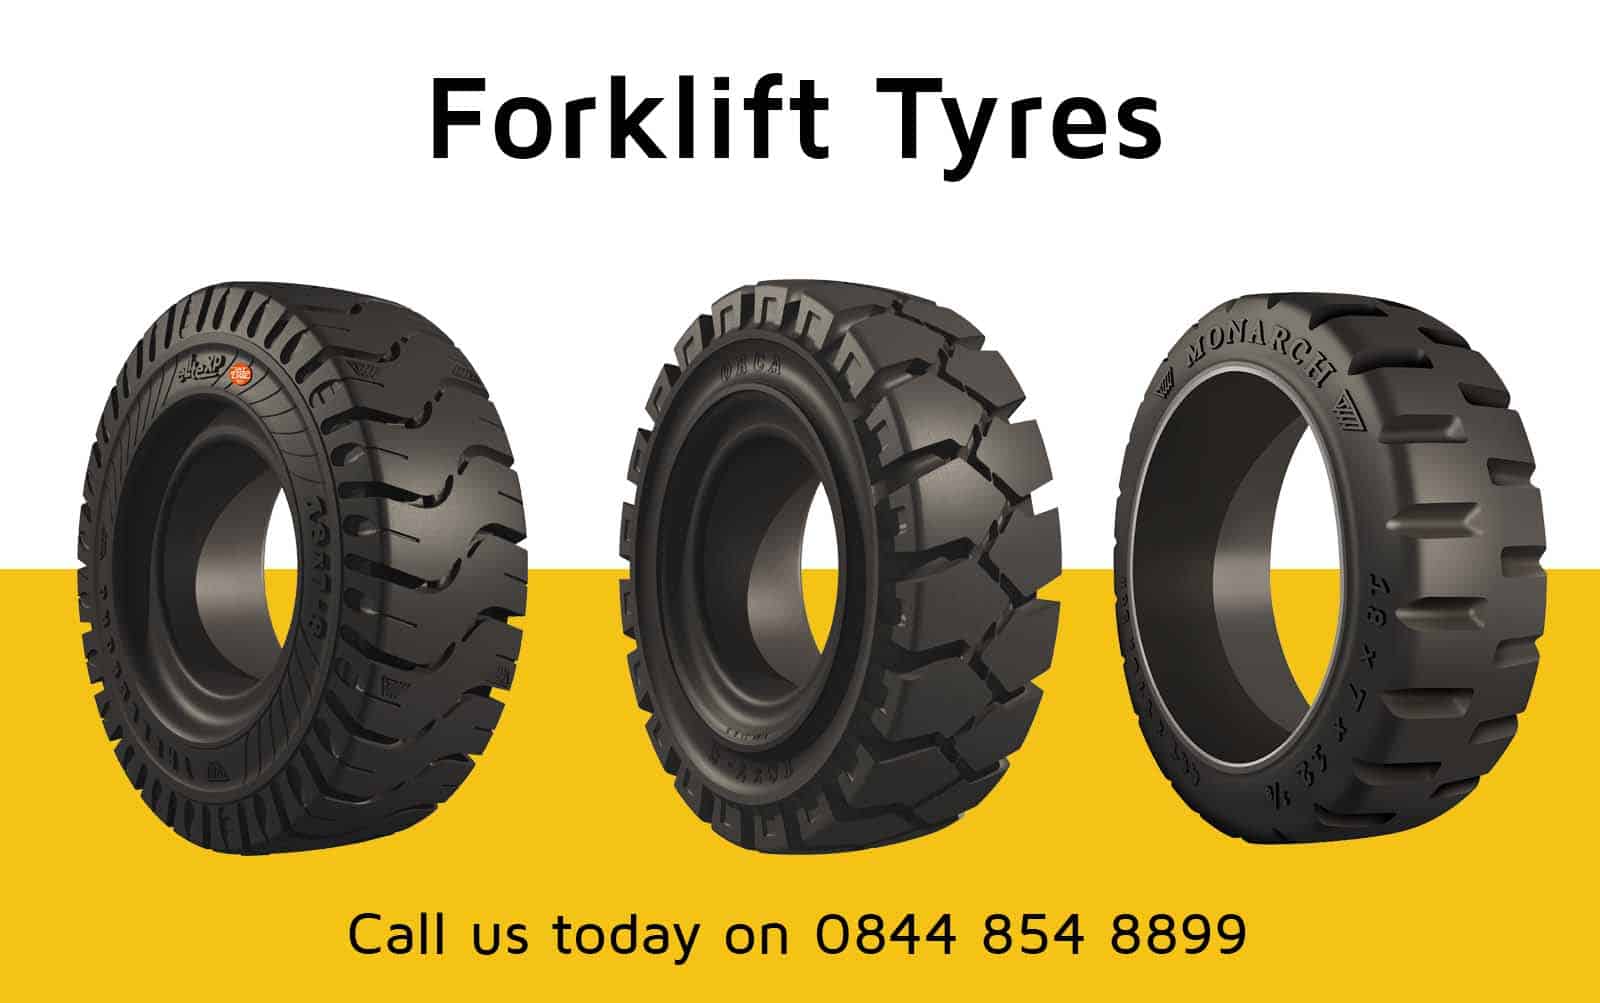 Forklift Tyres for sale